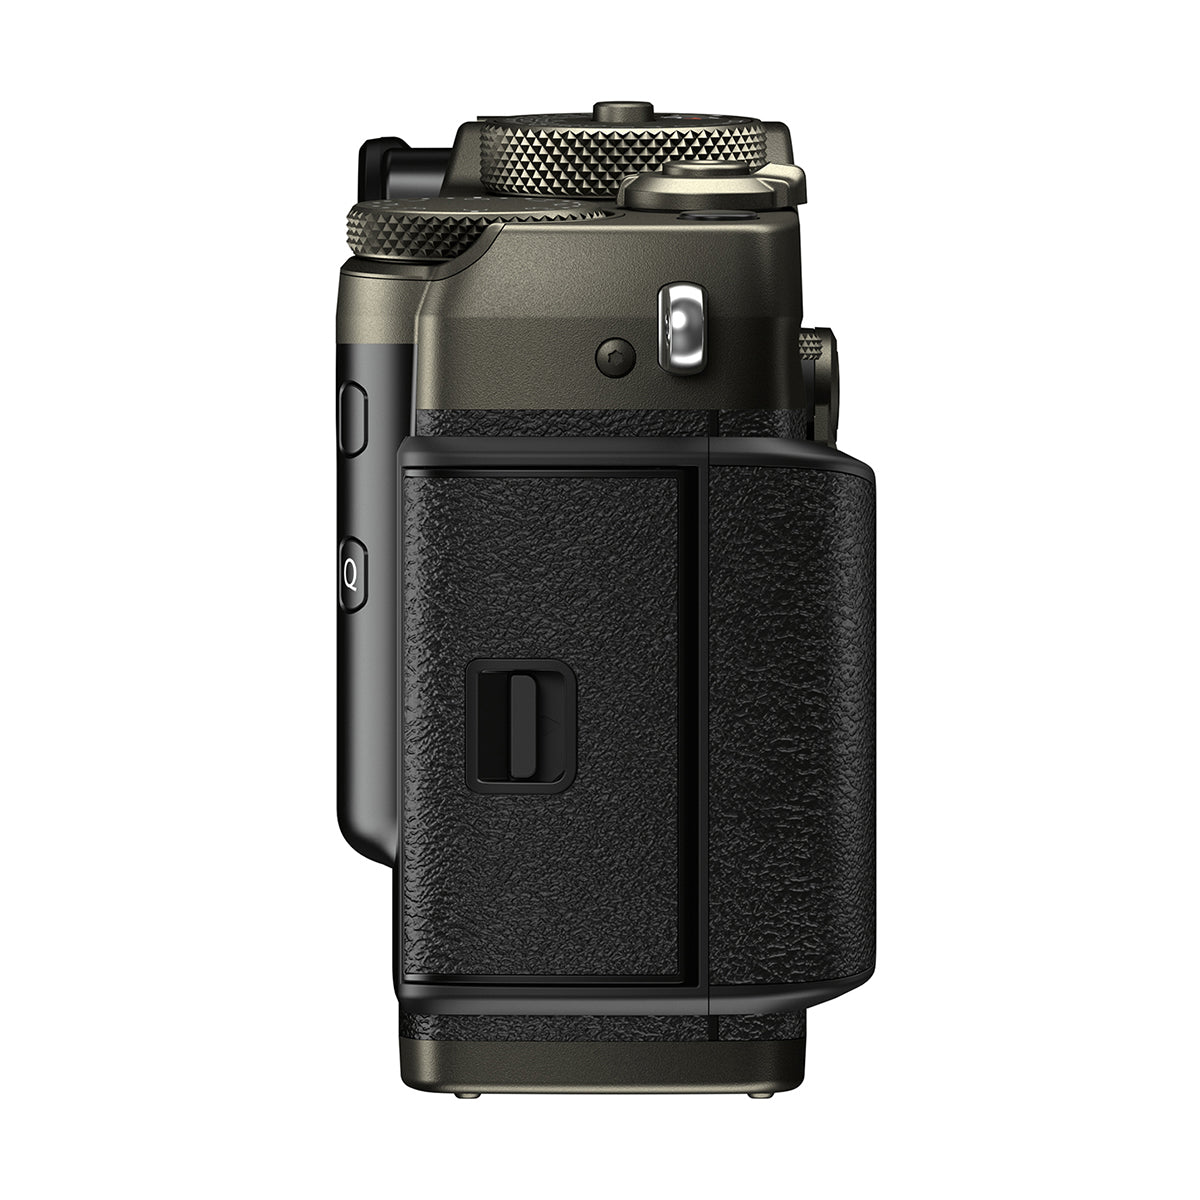 Fujifilm X-Pro3 Mirrorless Digital Camera Body (DURA Black)